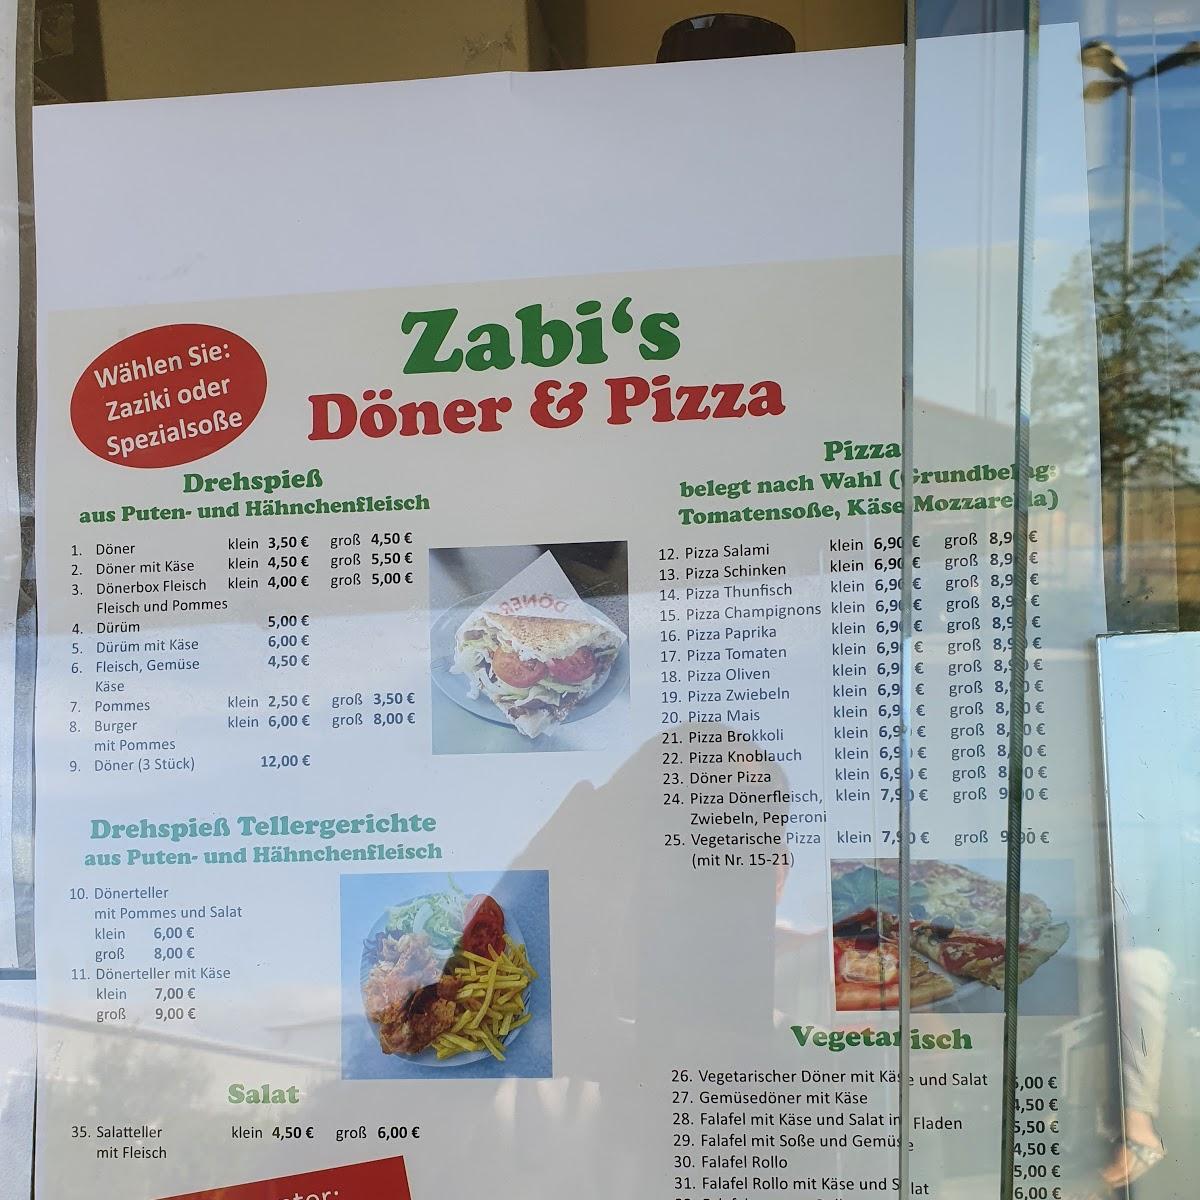 Restaurant "Zabi